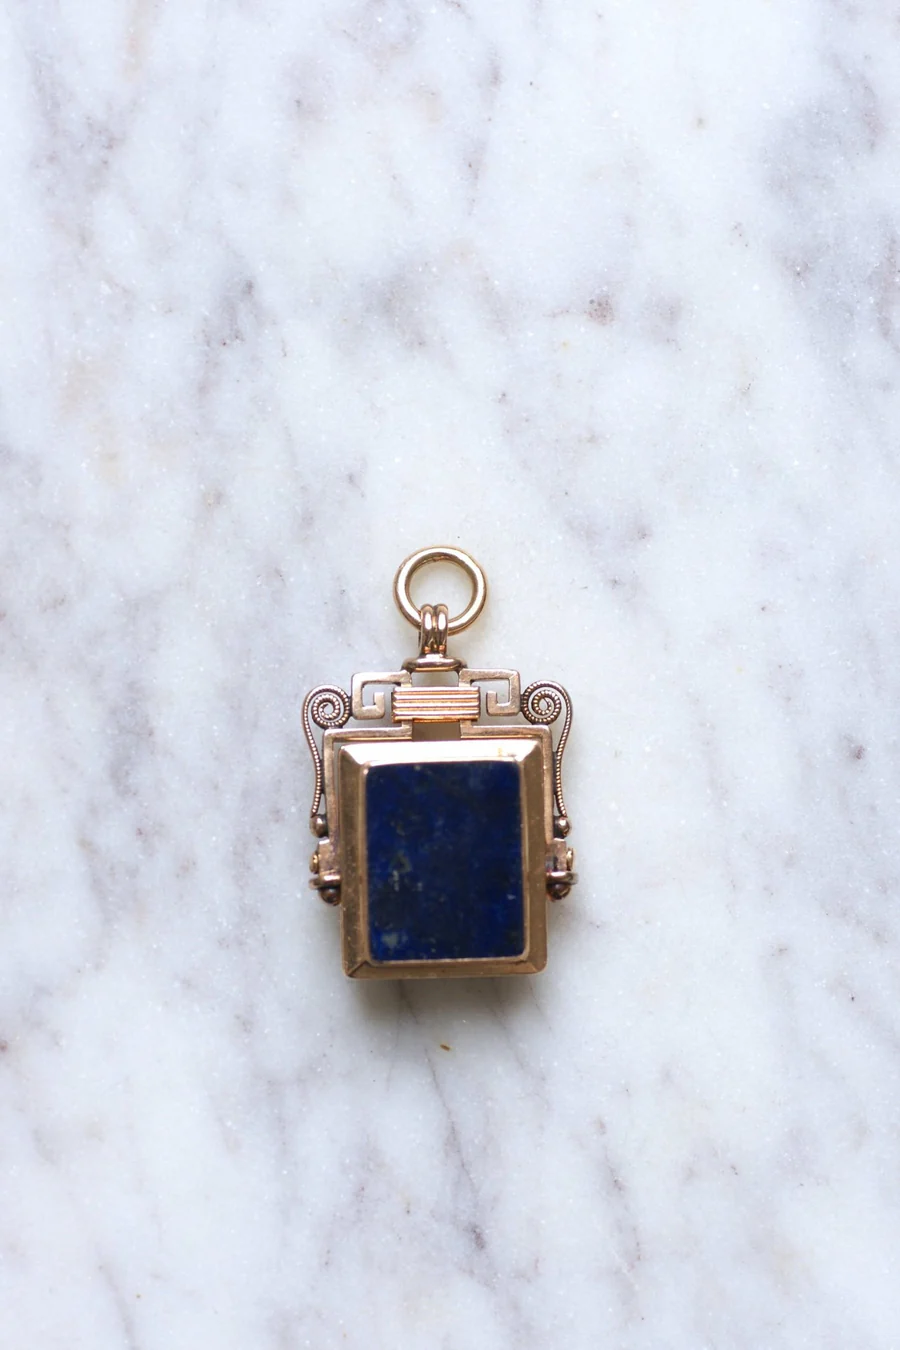 Antique rose gold and lapis lazuli photo medallion pendant - Penelope Gallery